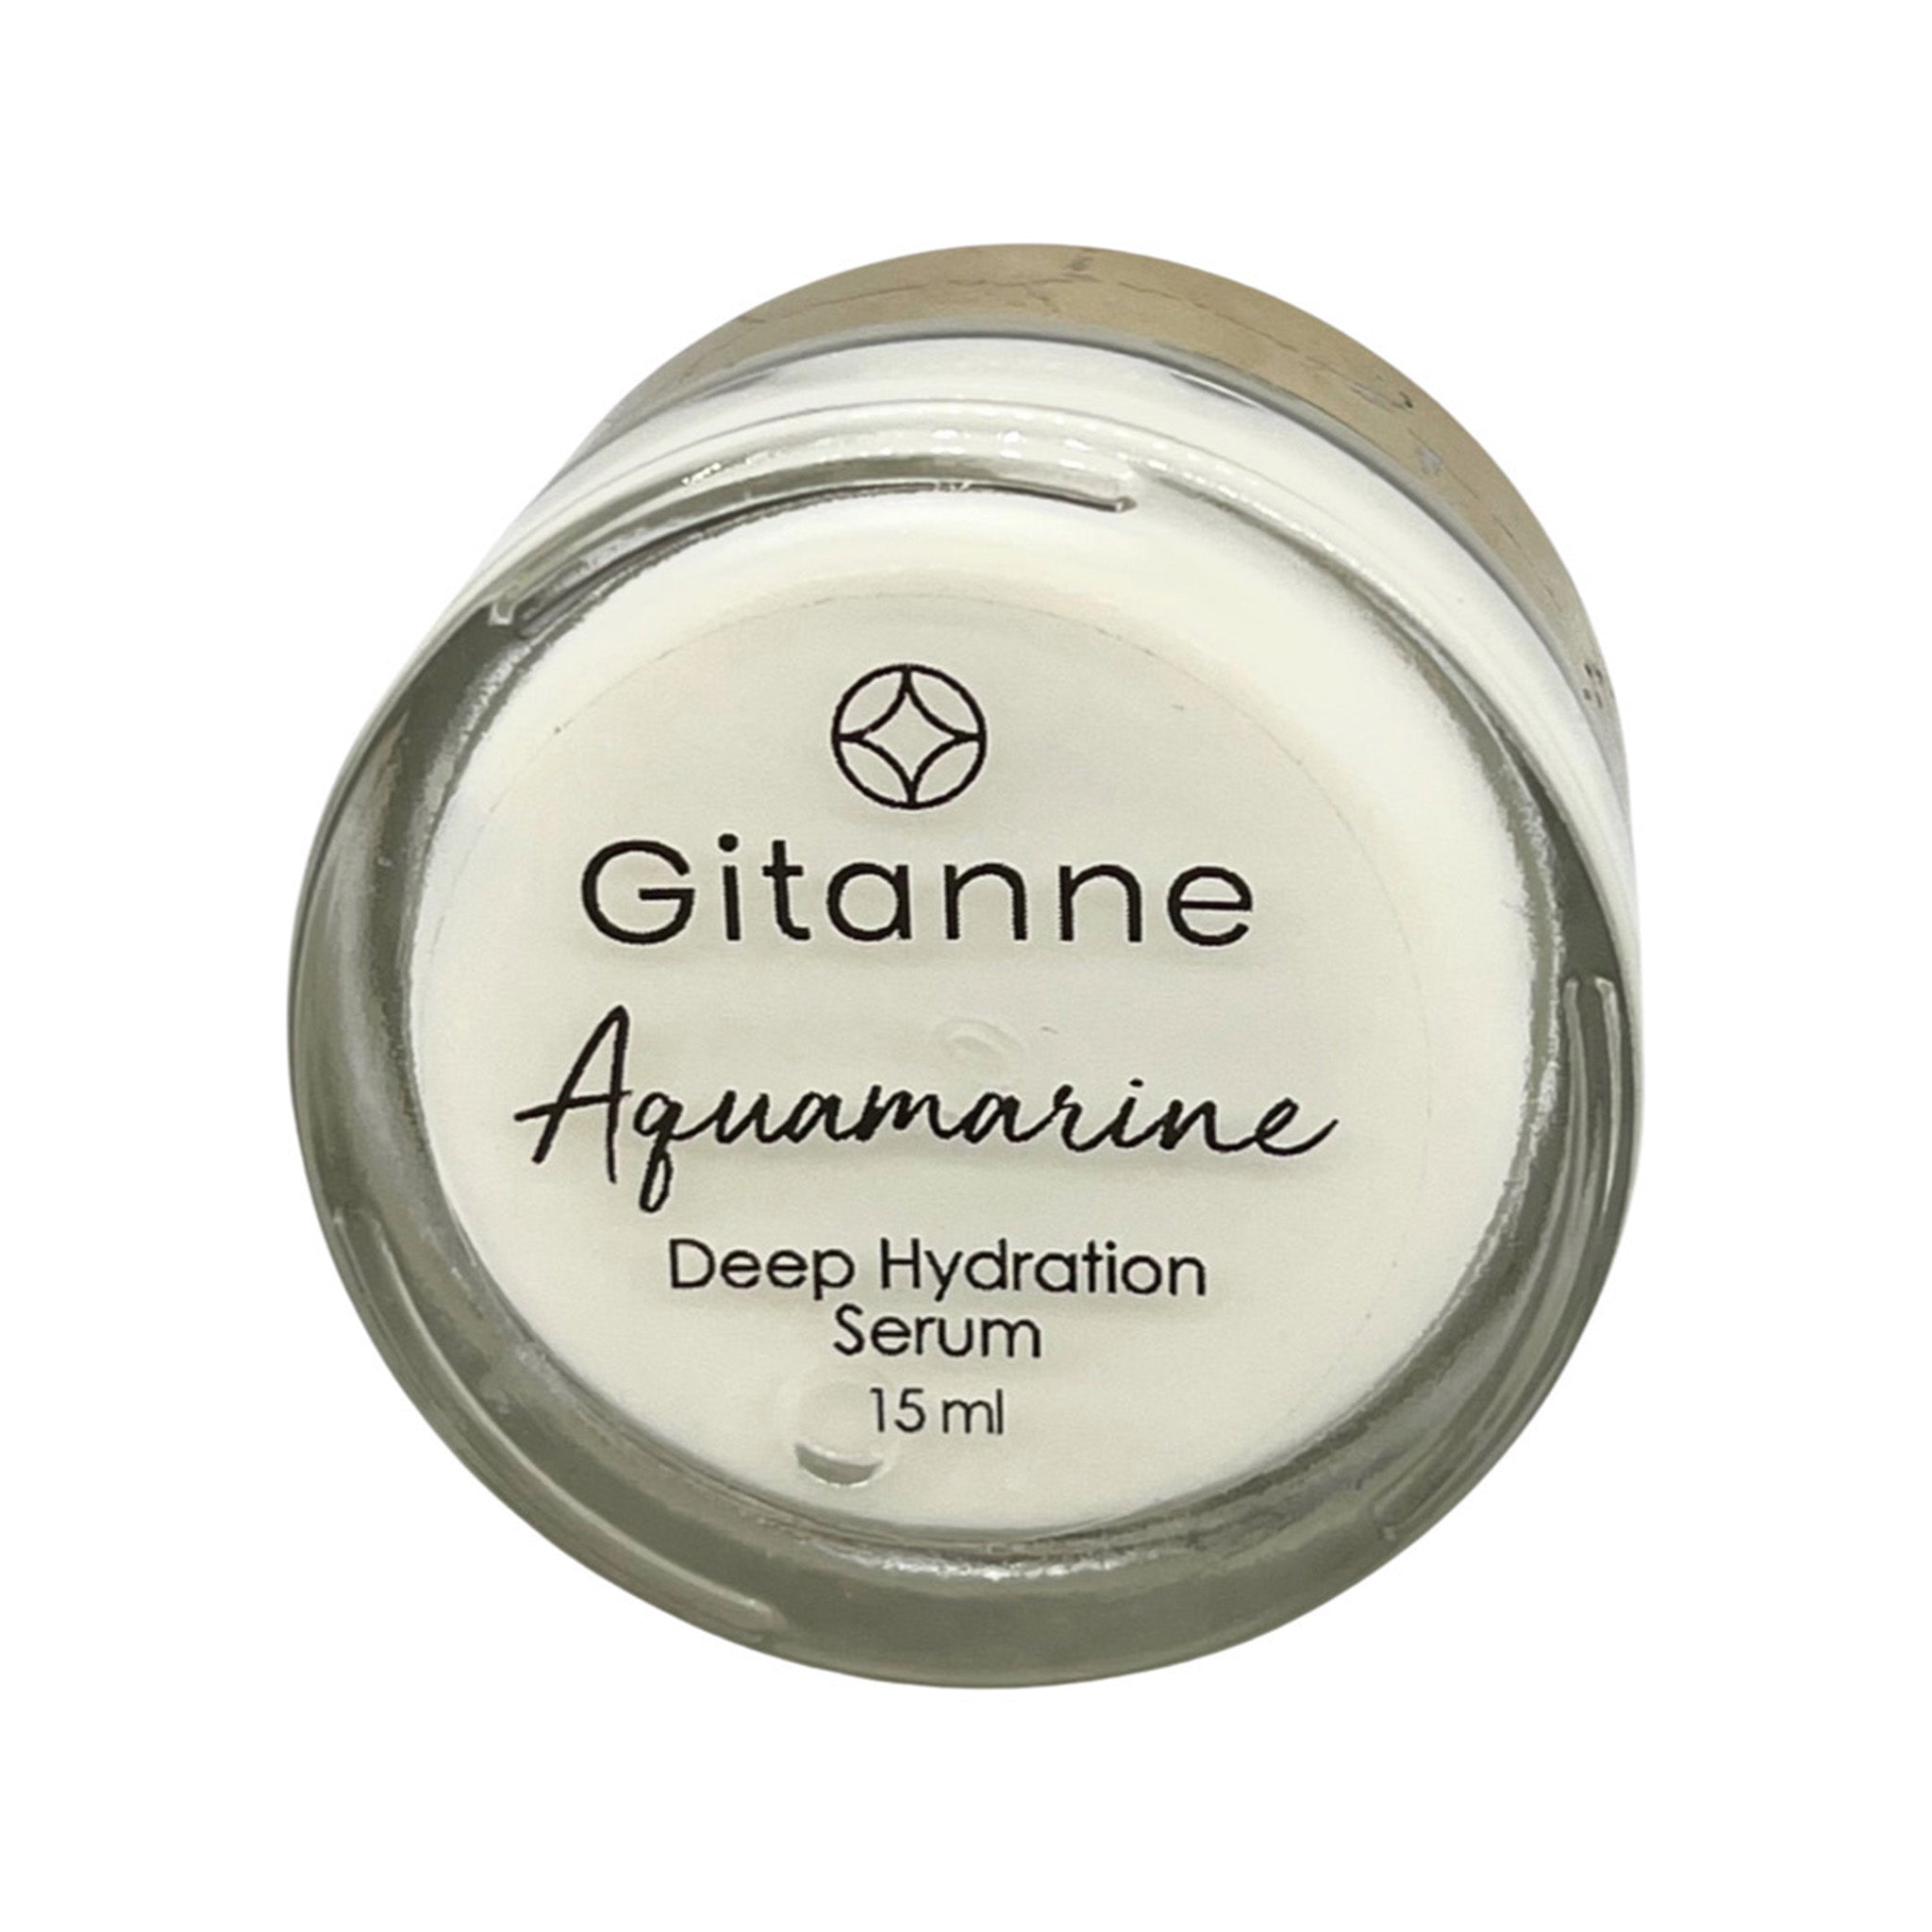 Gitanne Skincare Aquamarine Peptide Pressed Face Serum is a deep hydration and nutrient rich serum